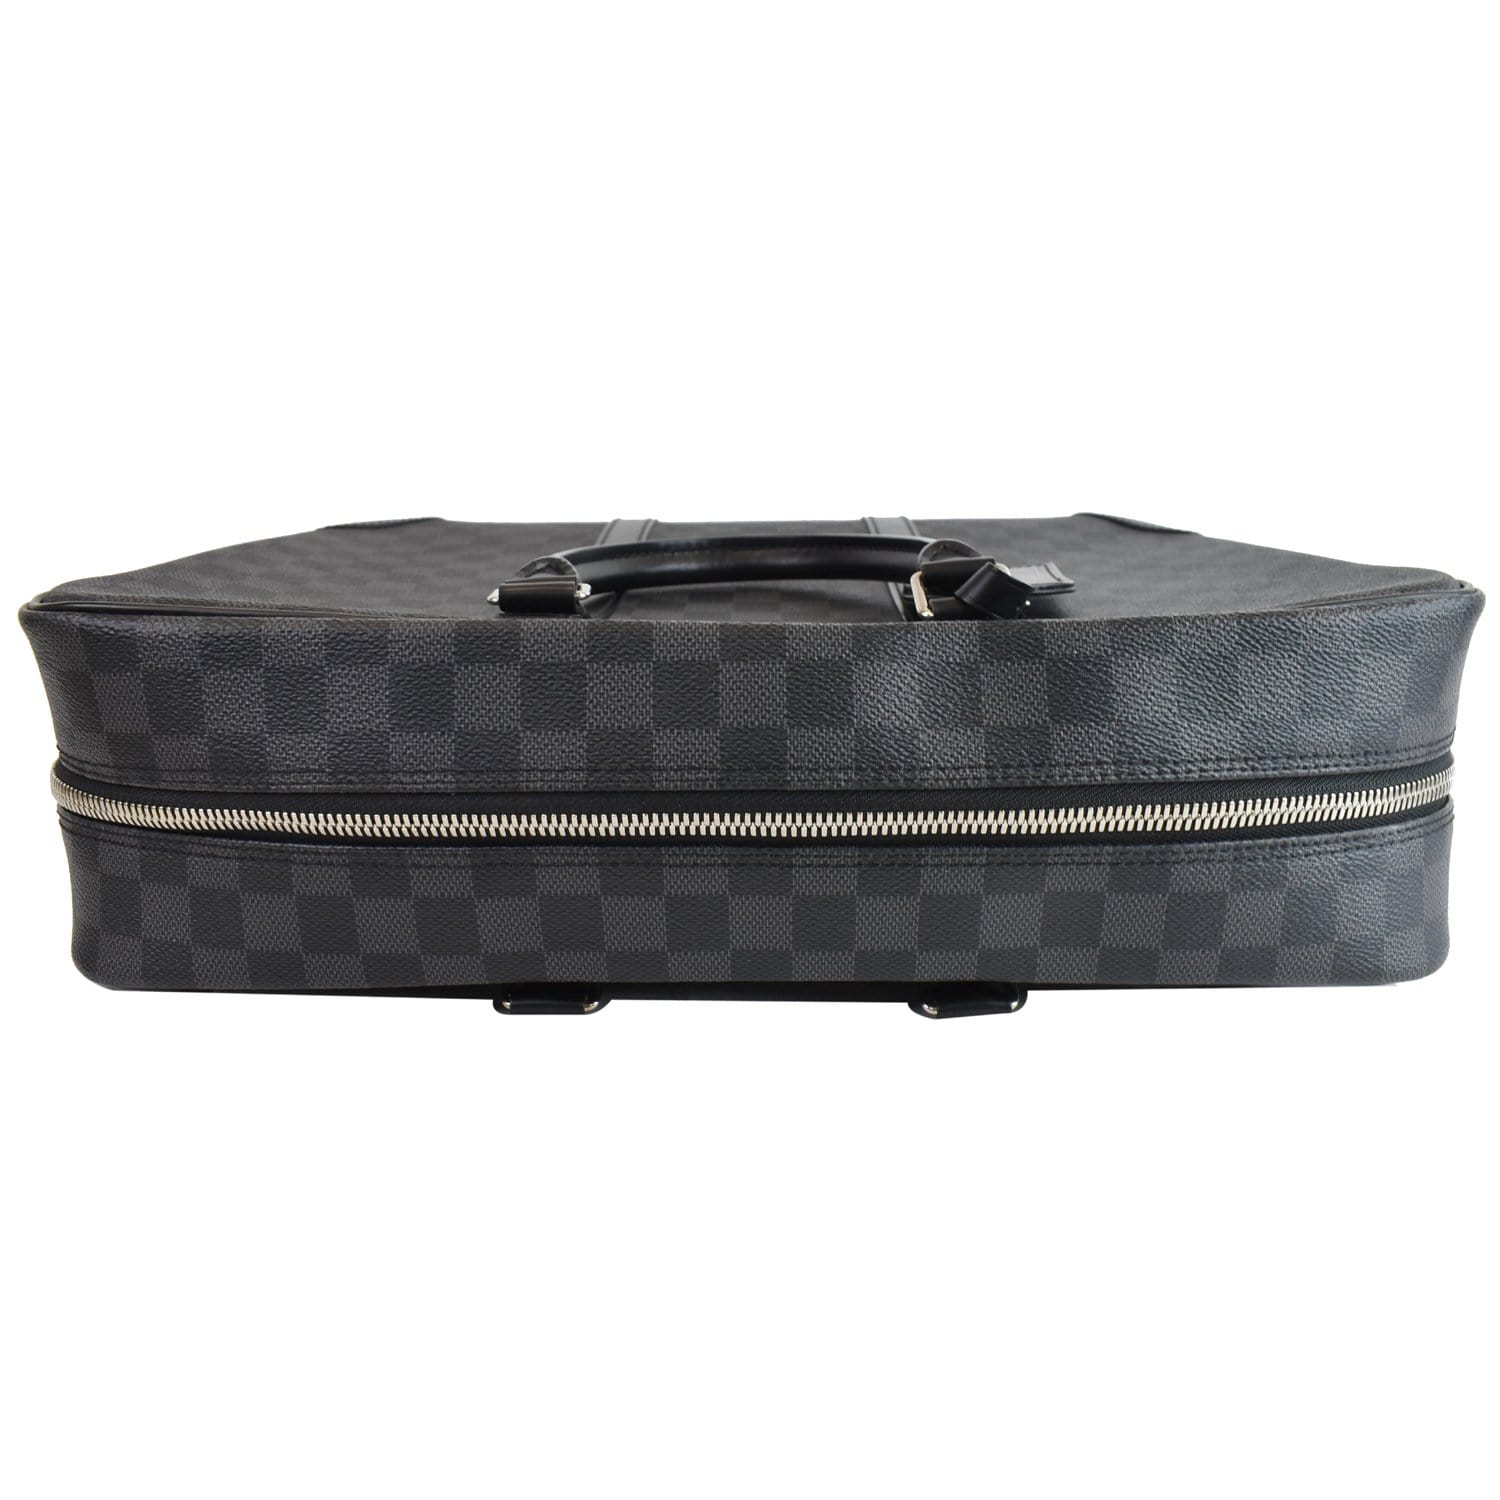 Louis Vuitton Damier Graphite Briefcase Backpack Bag